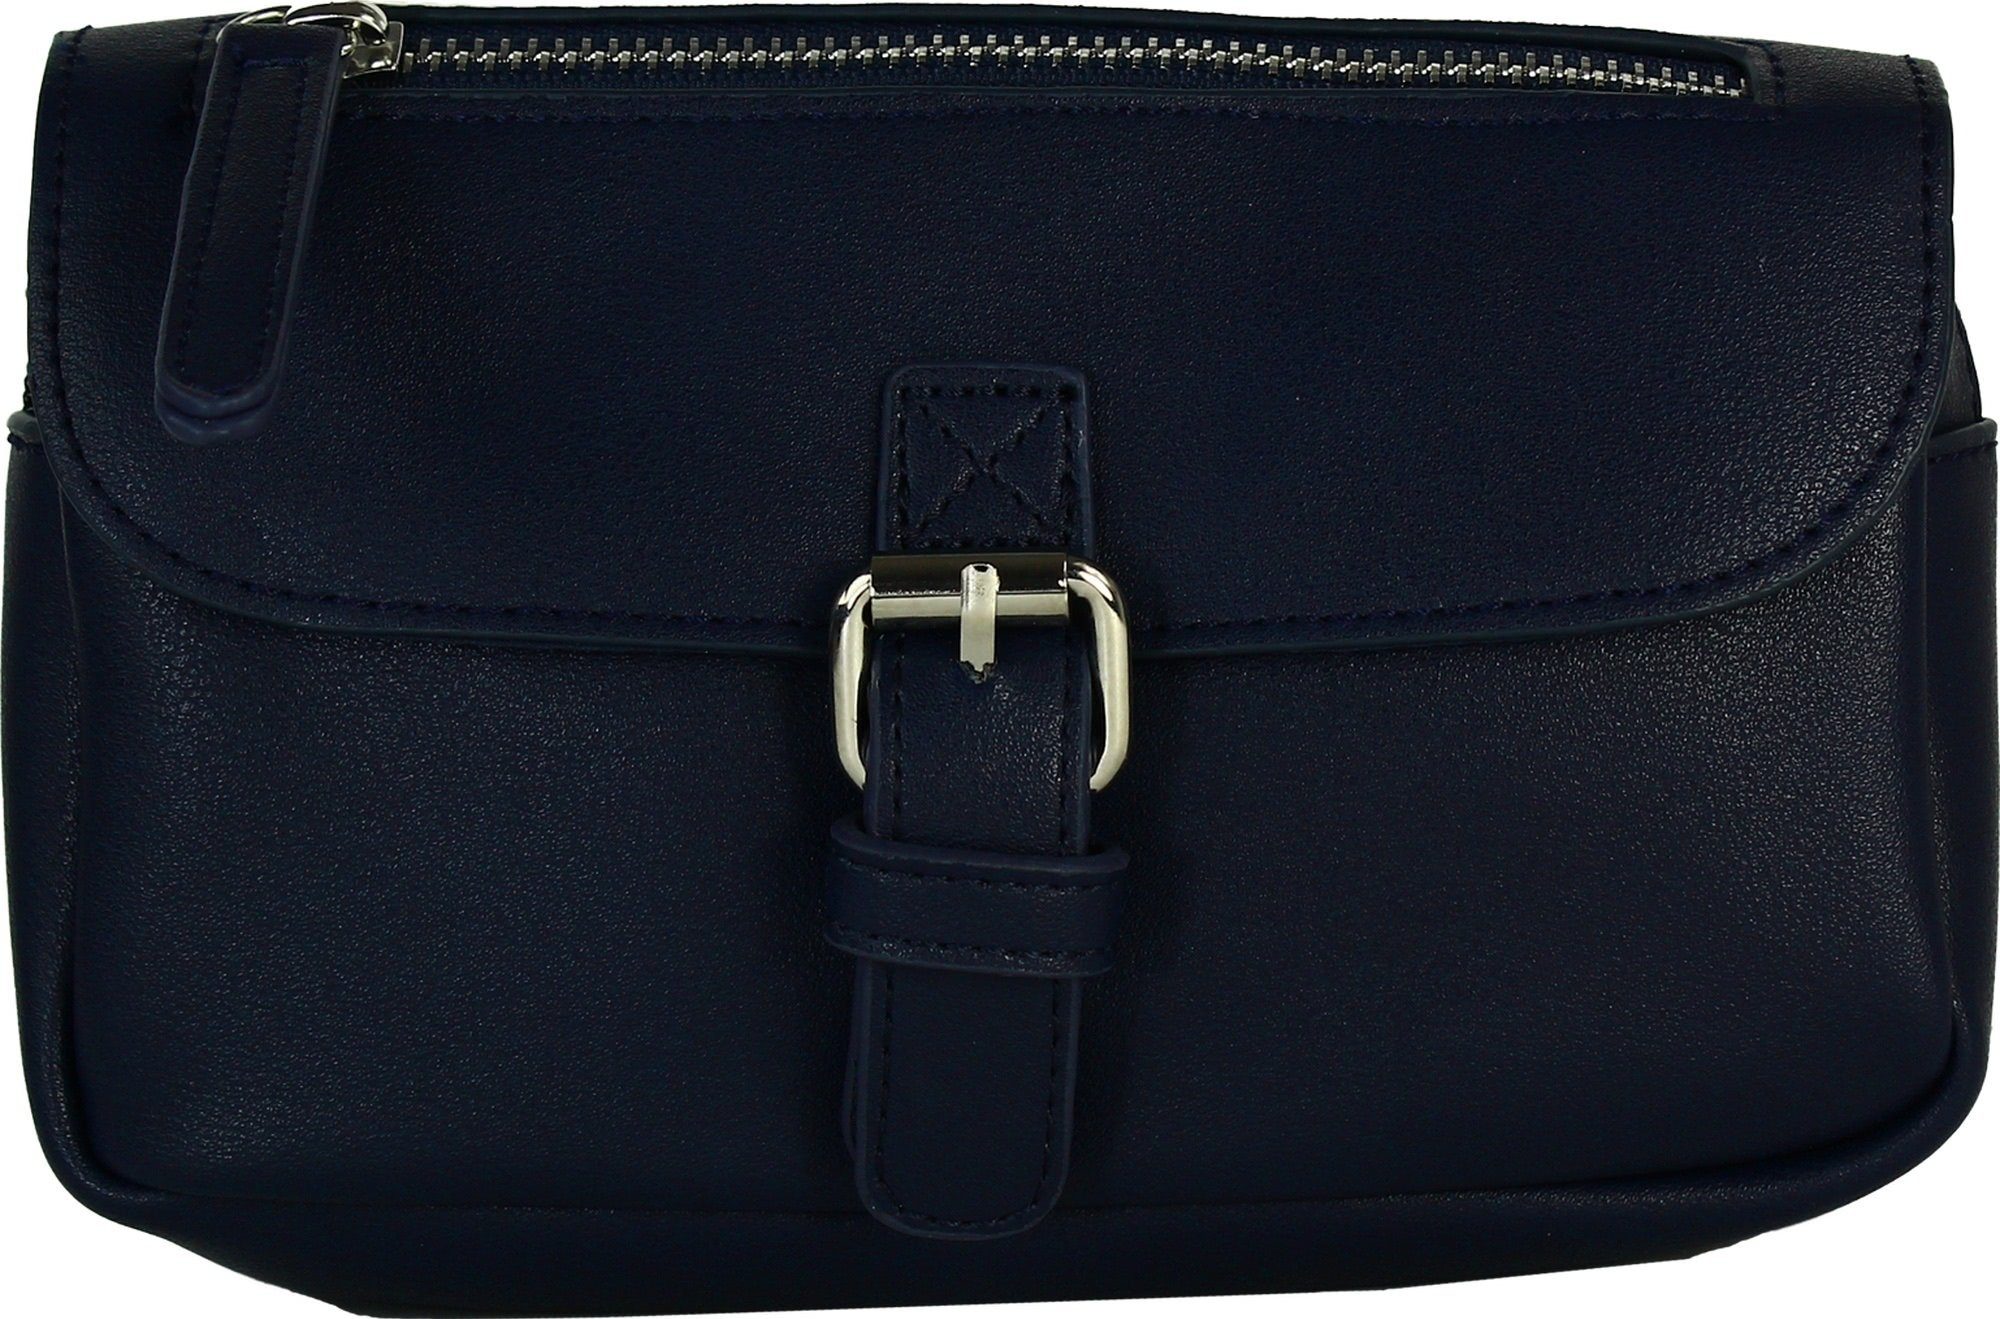 New Bags Gürteltasche OTD5024X New Bags Damen Hüfttasche eckig (Gürteltasche), Damen, Jugend Tasche beige, ca. 19cm x ca. 5cm navy-blau